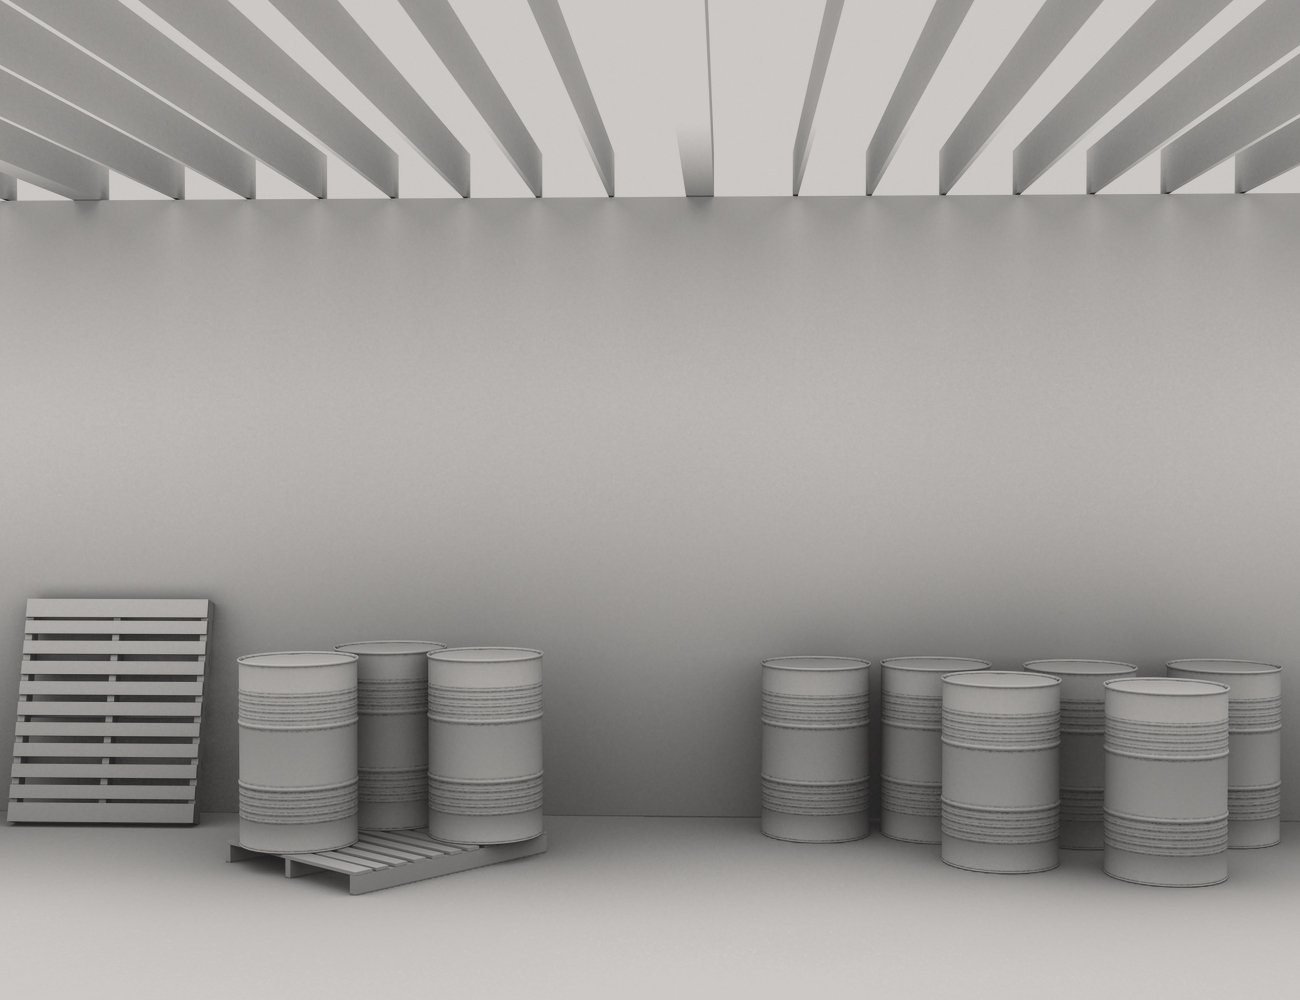 Industrial Dock by: DarkEdgeDesign, 3D Models by Daz 3D